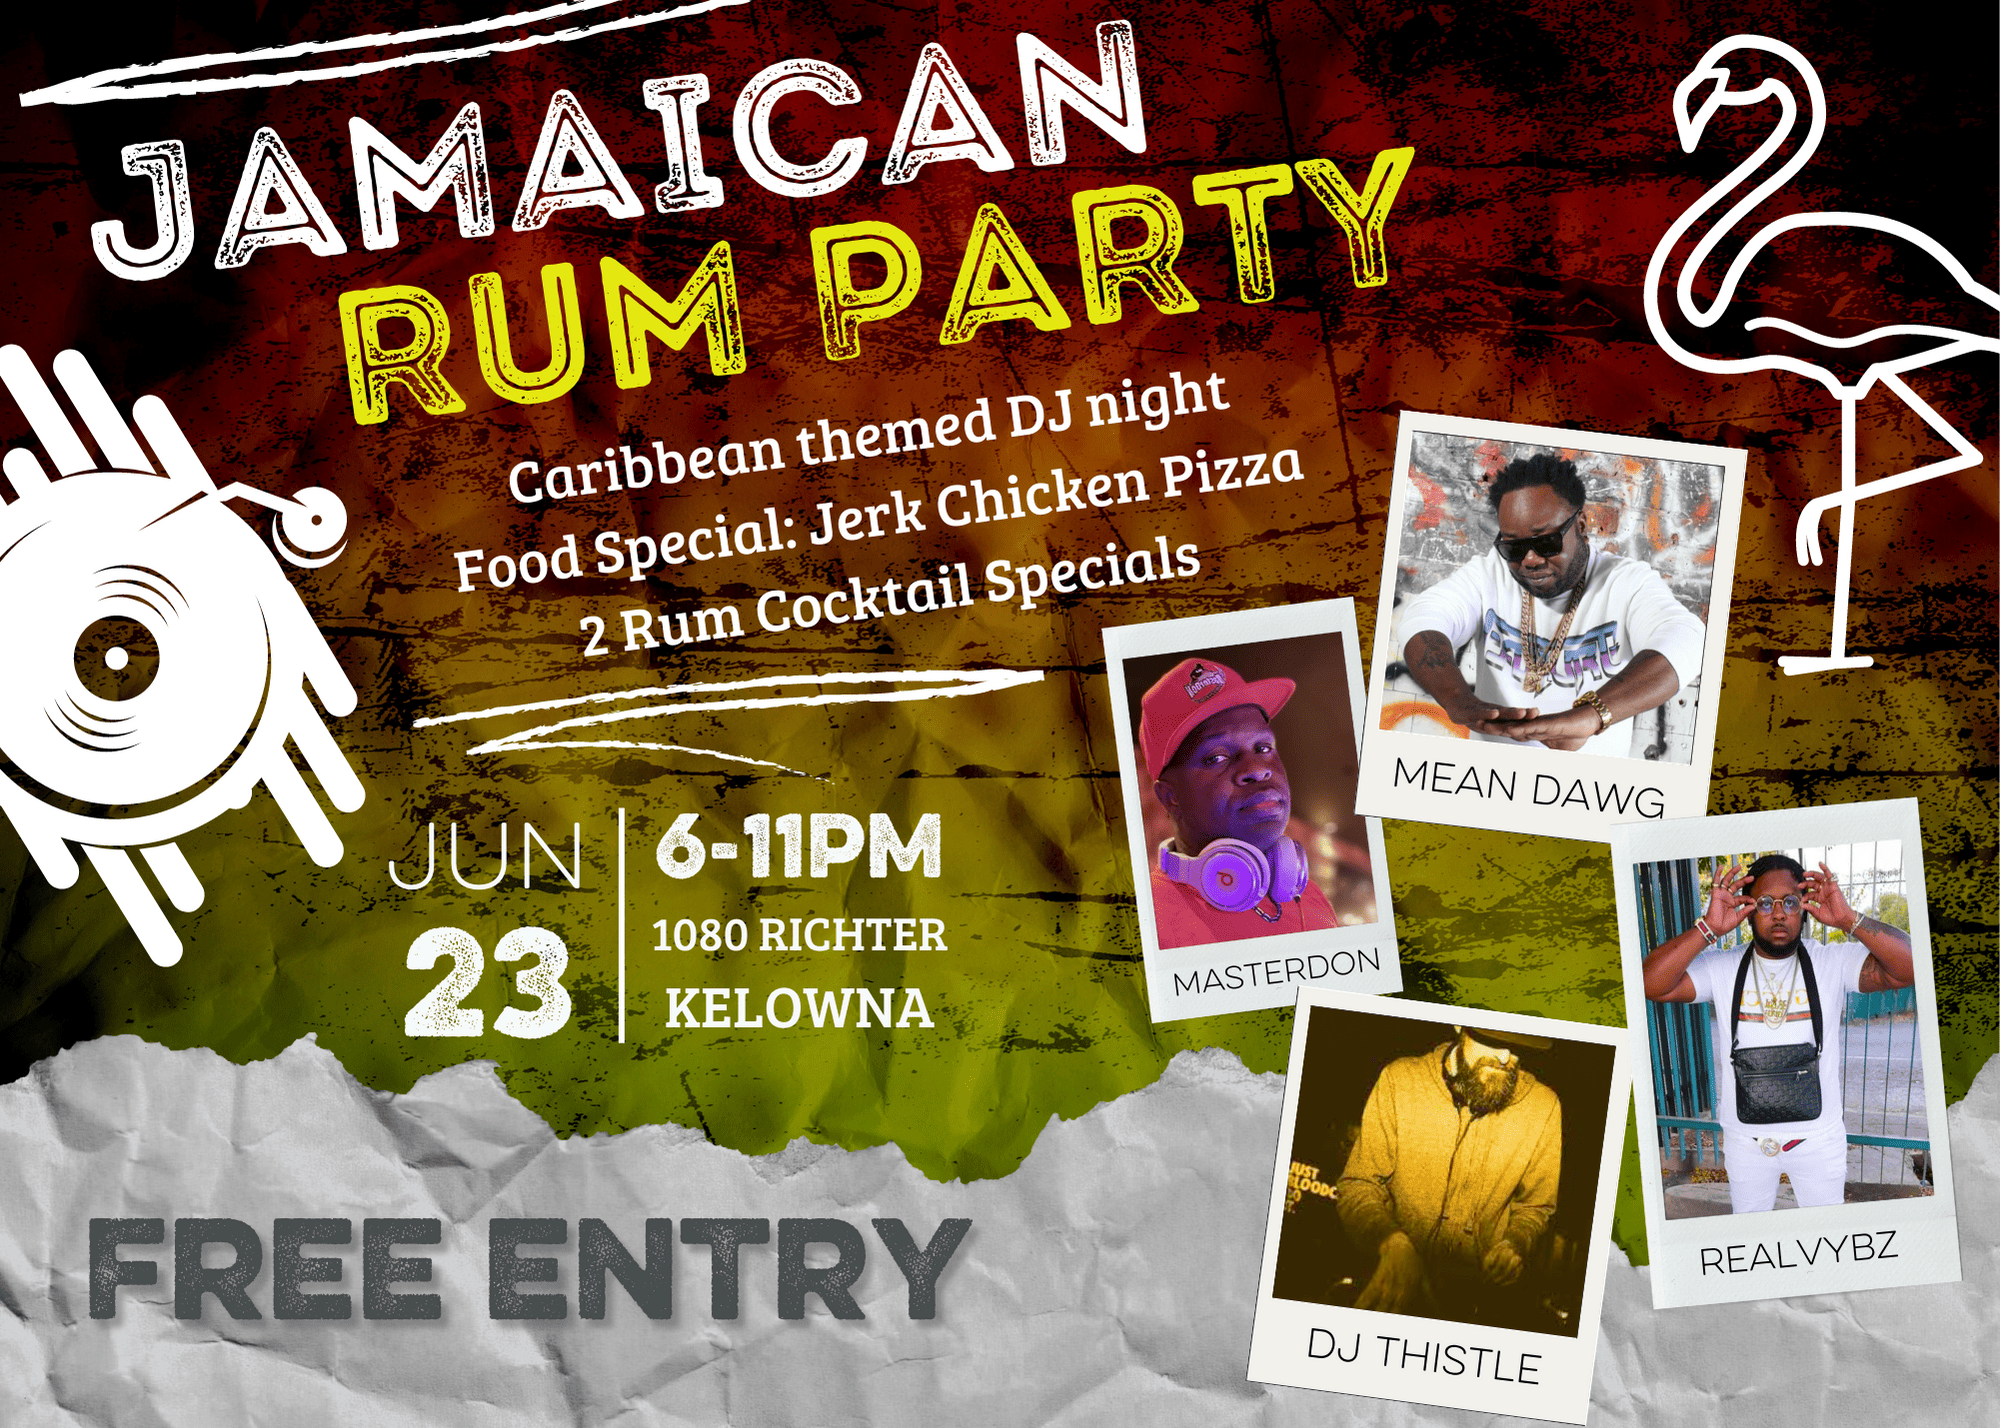 Jamaican Rum Party